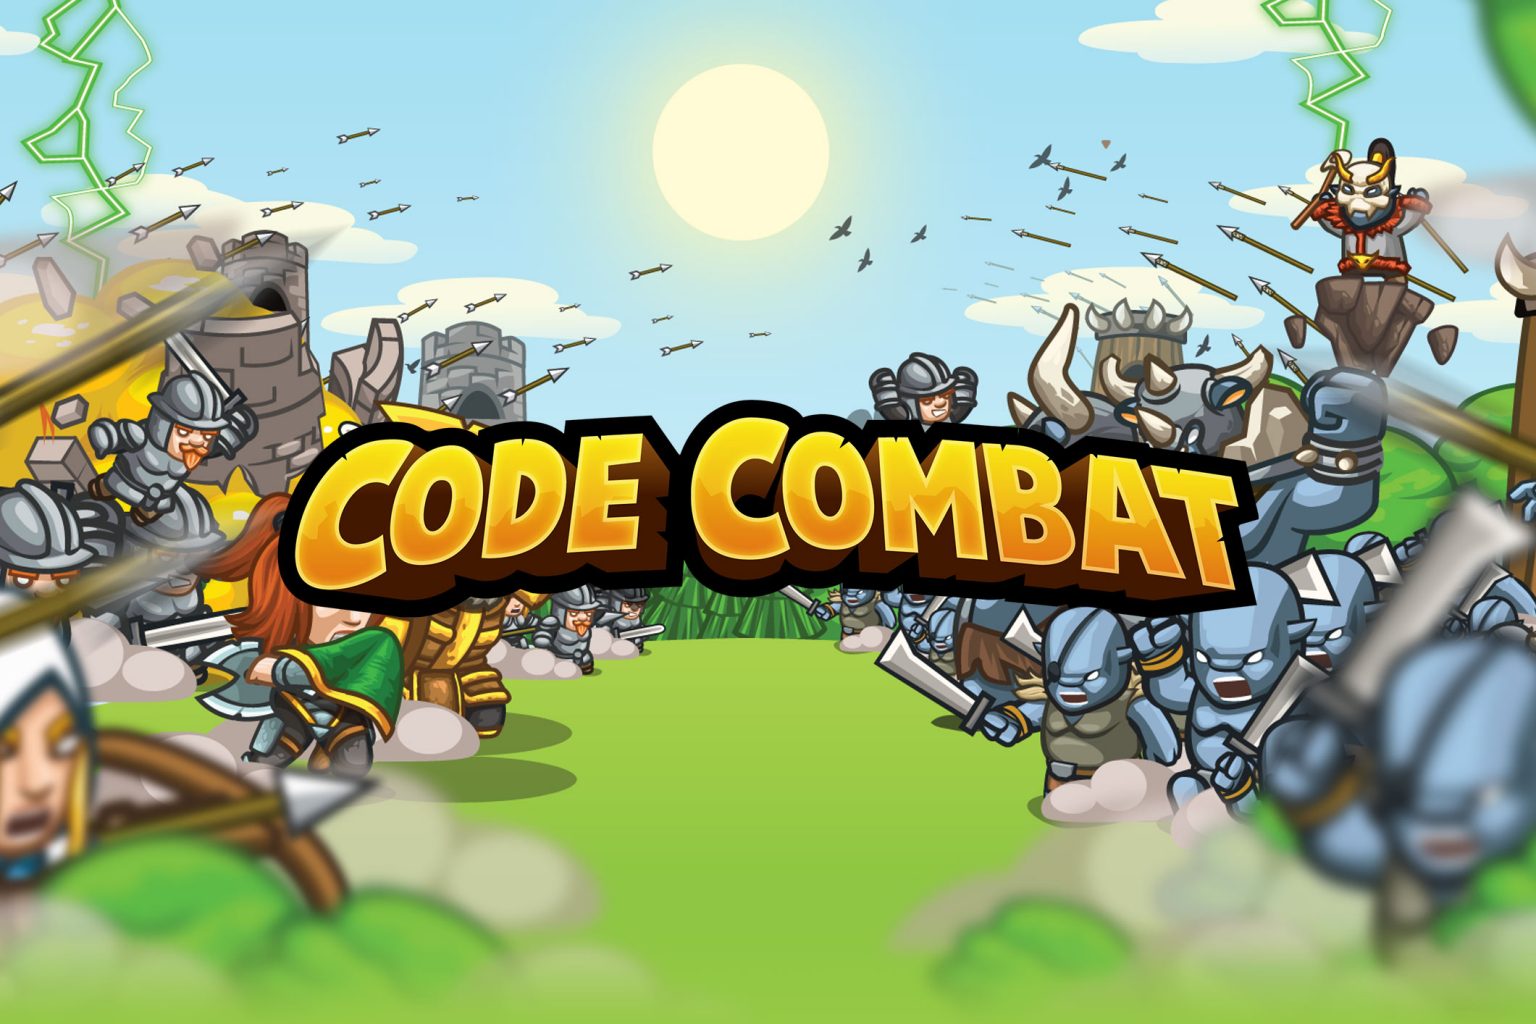 Code Combat Subscription - Think Big Coding